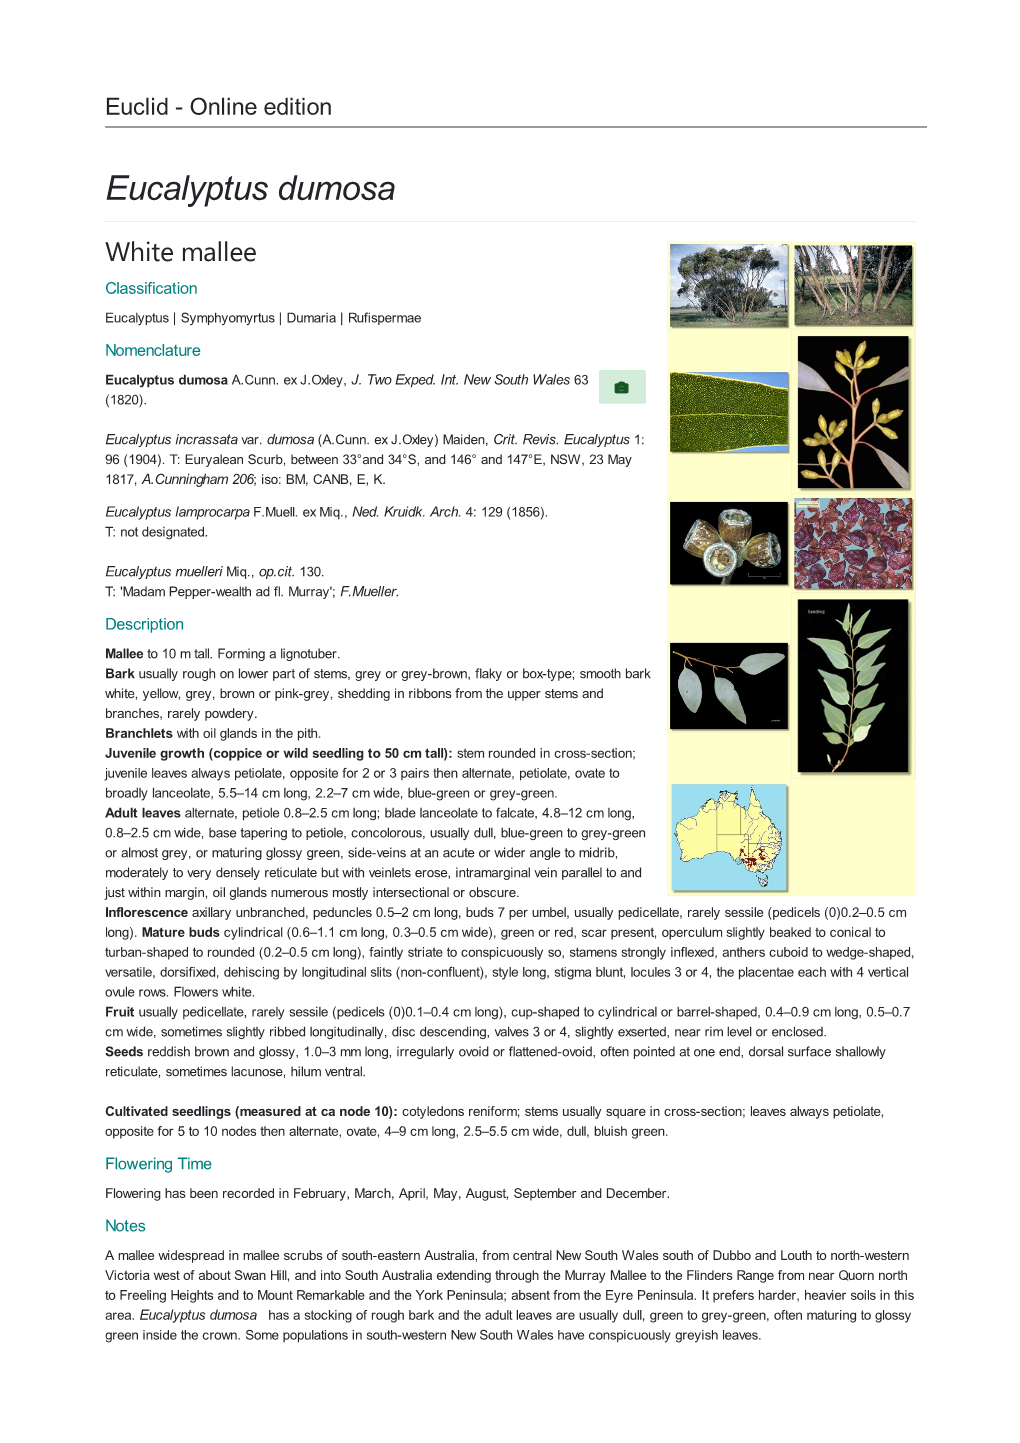 Eucalyptus Dumosa White Mallee Classification Eucalyptus | Symphyomyrtus | Dumaria | Rufispermae Nomenclature